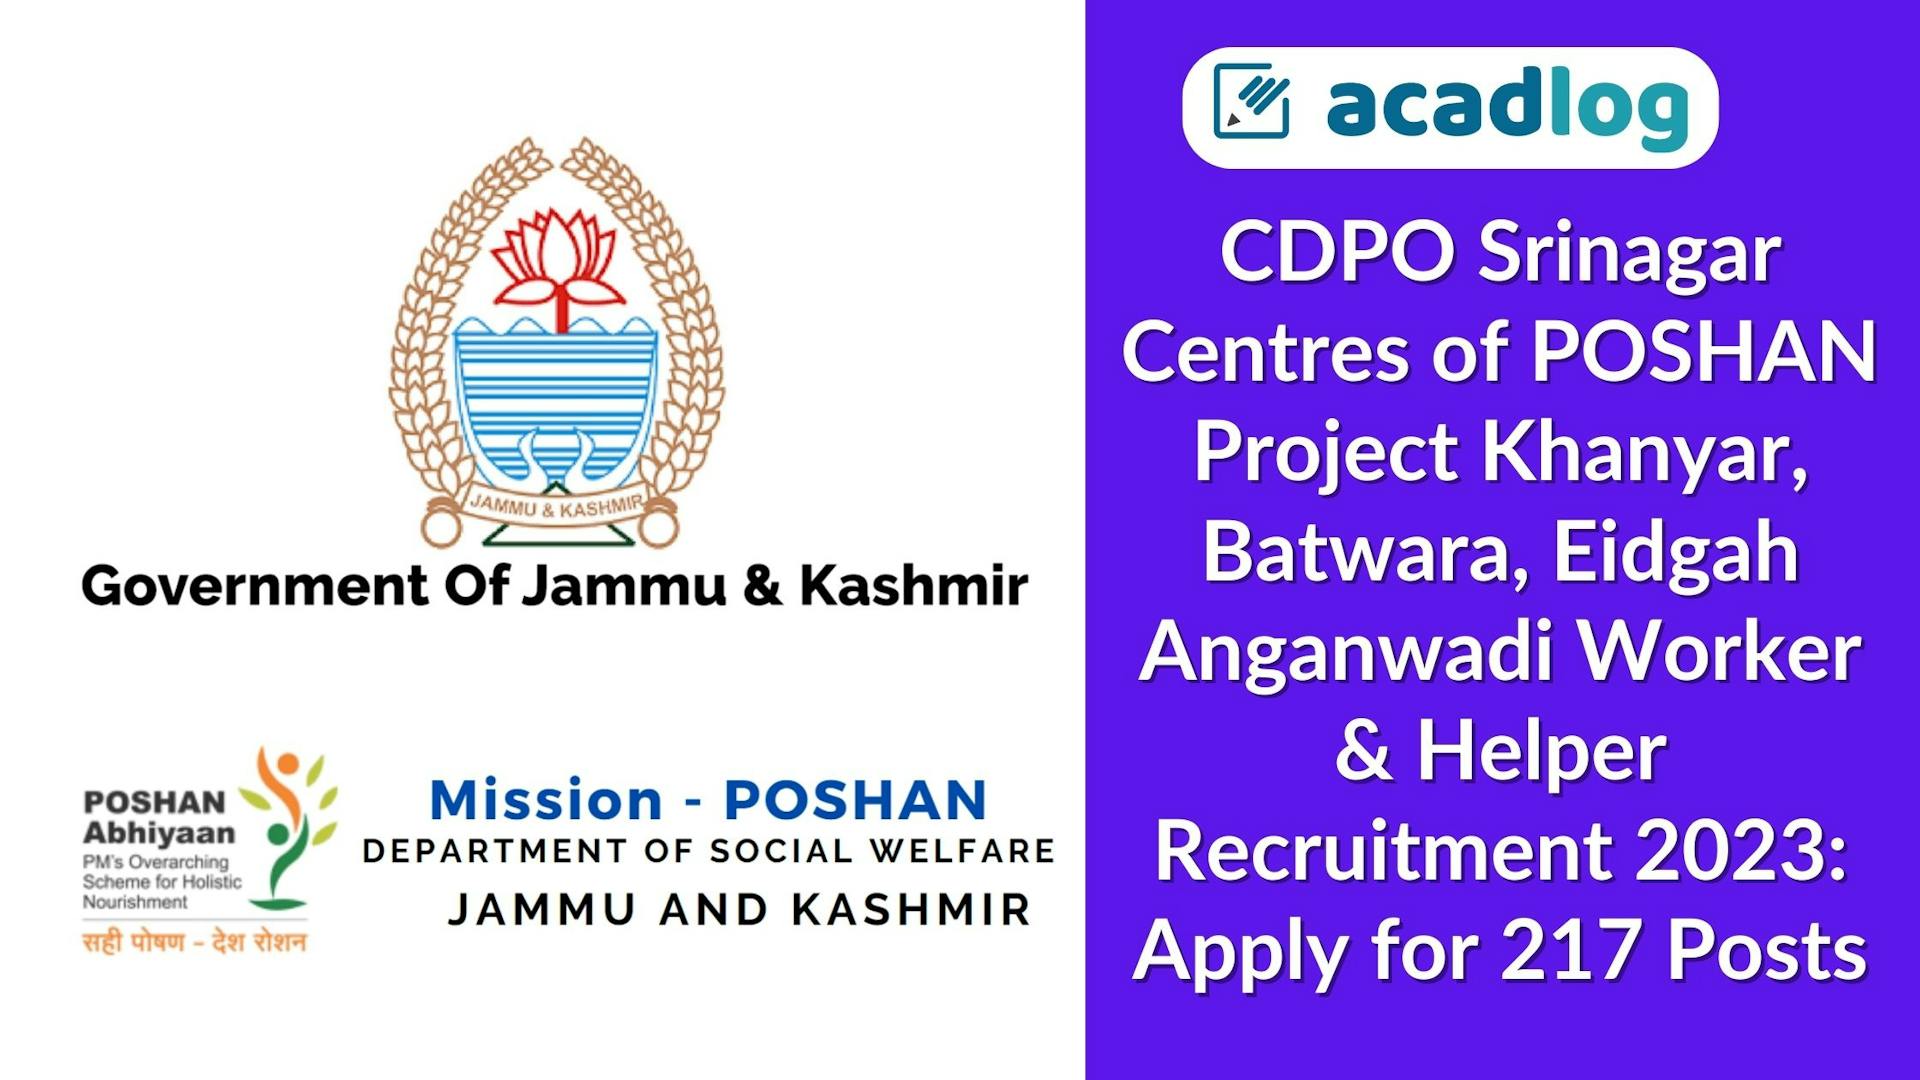 CDPO Srinagar Anganwadi Worker & Helper Recruitment 2023: Apply for 217 Posts